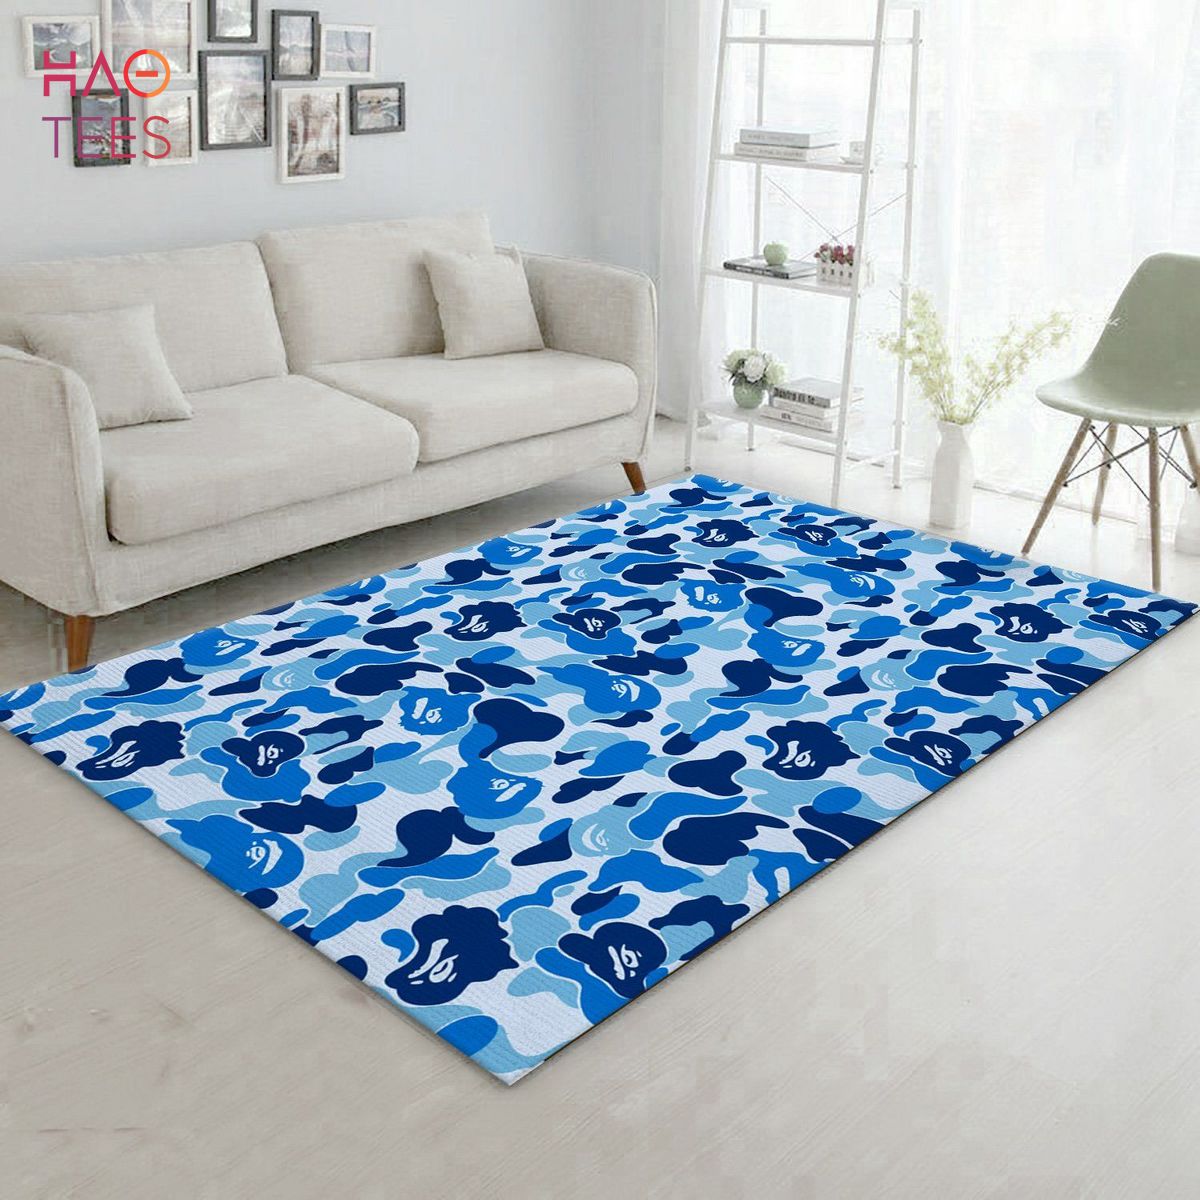 Bape x Supreme Mat, Furniture & Home Living, Home Decor, Carpets